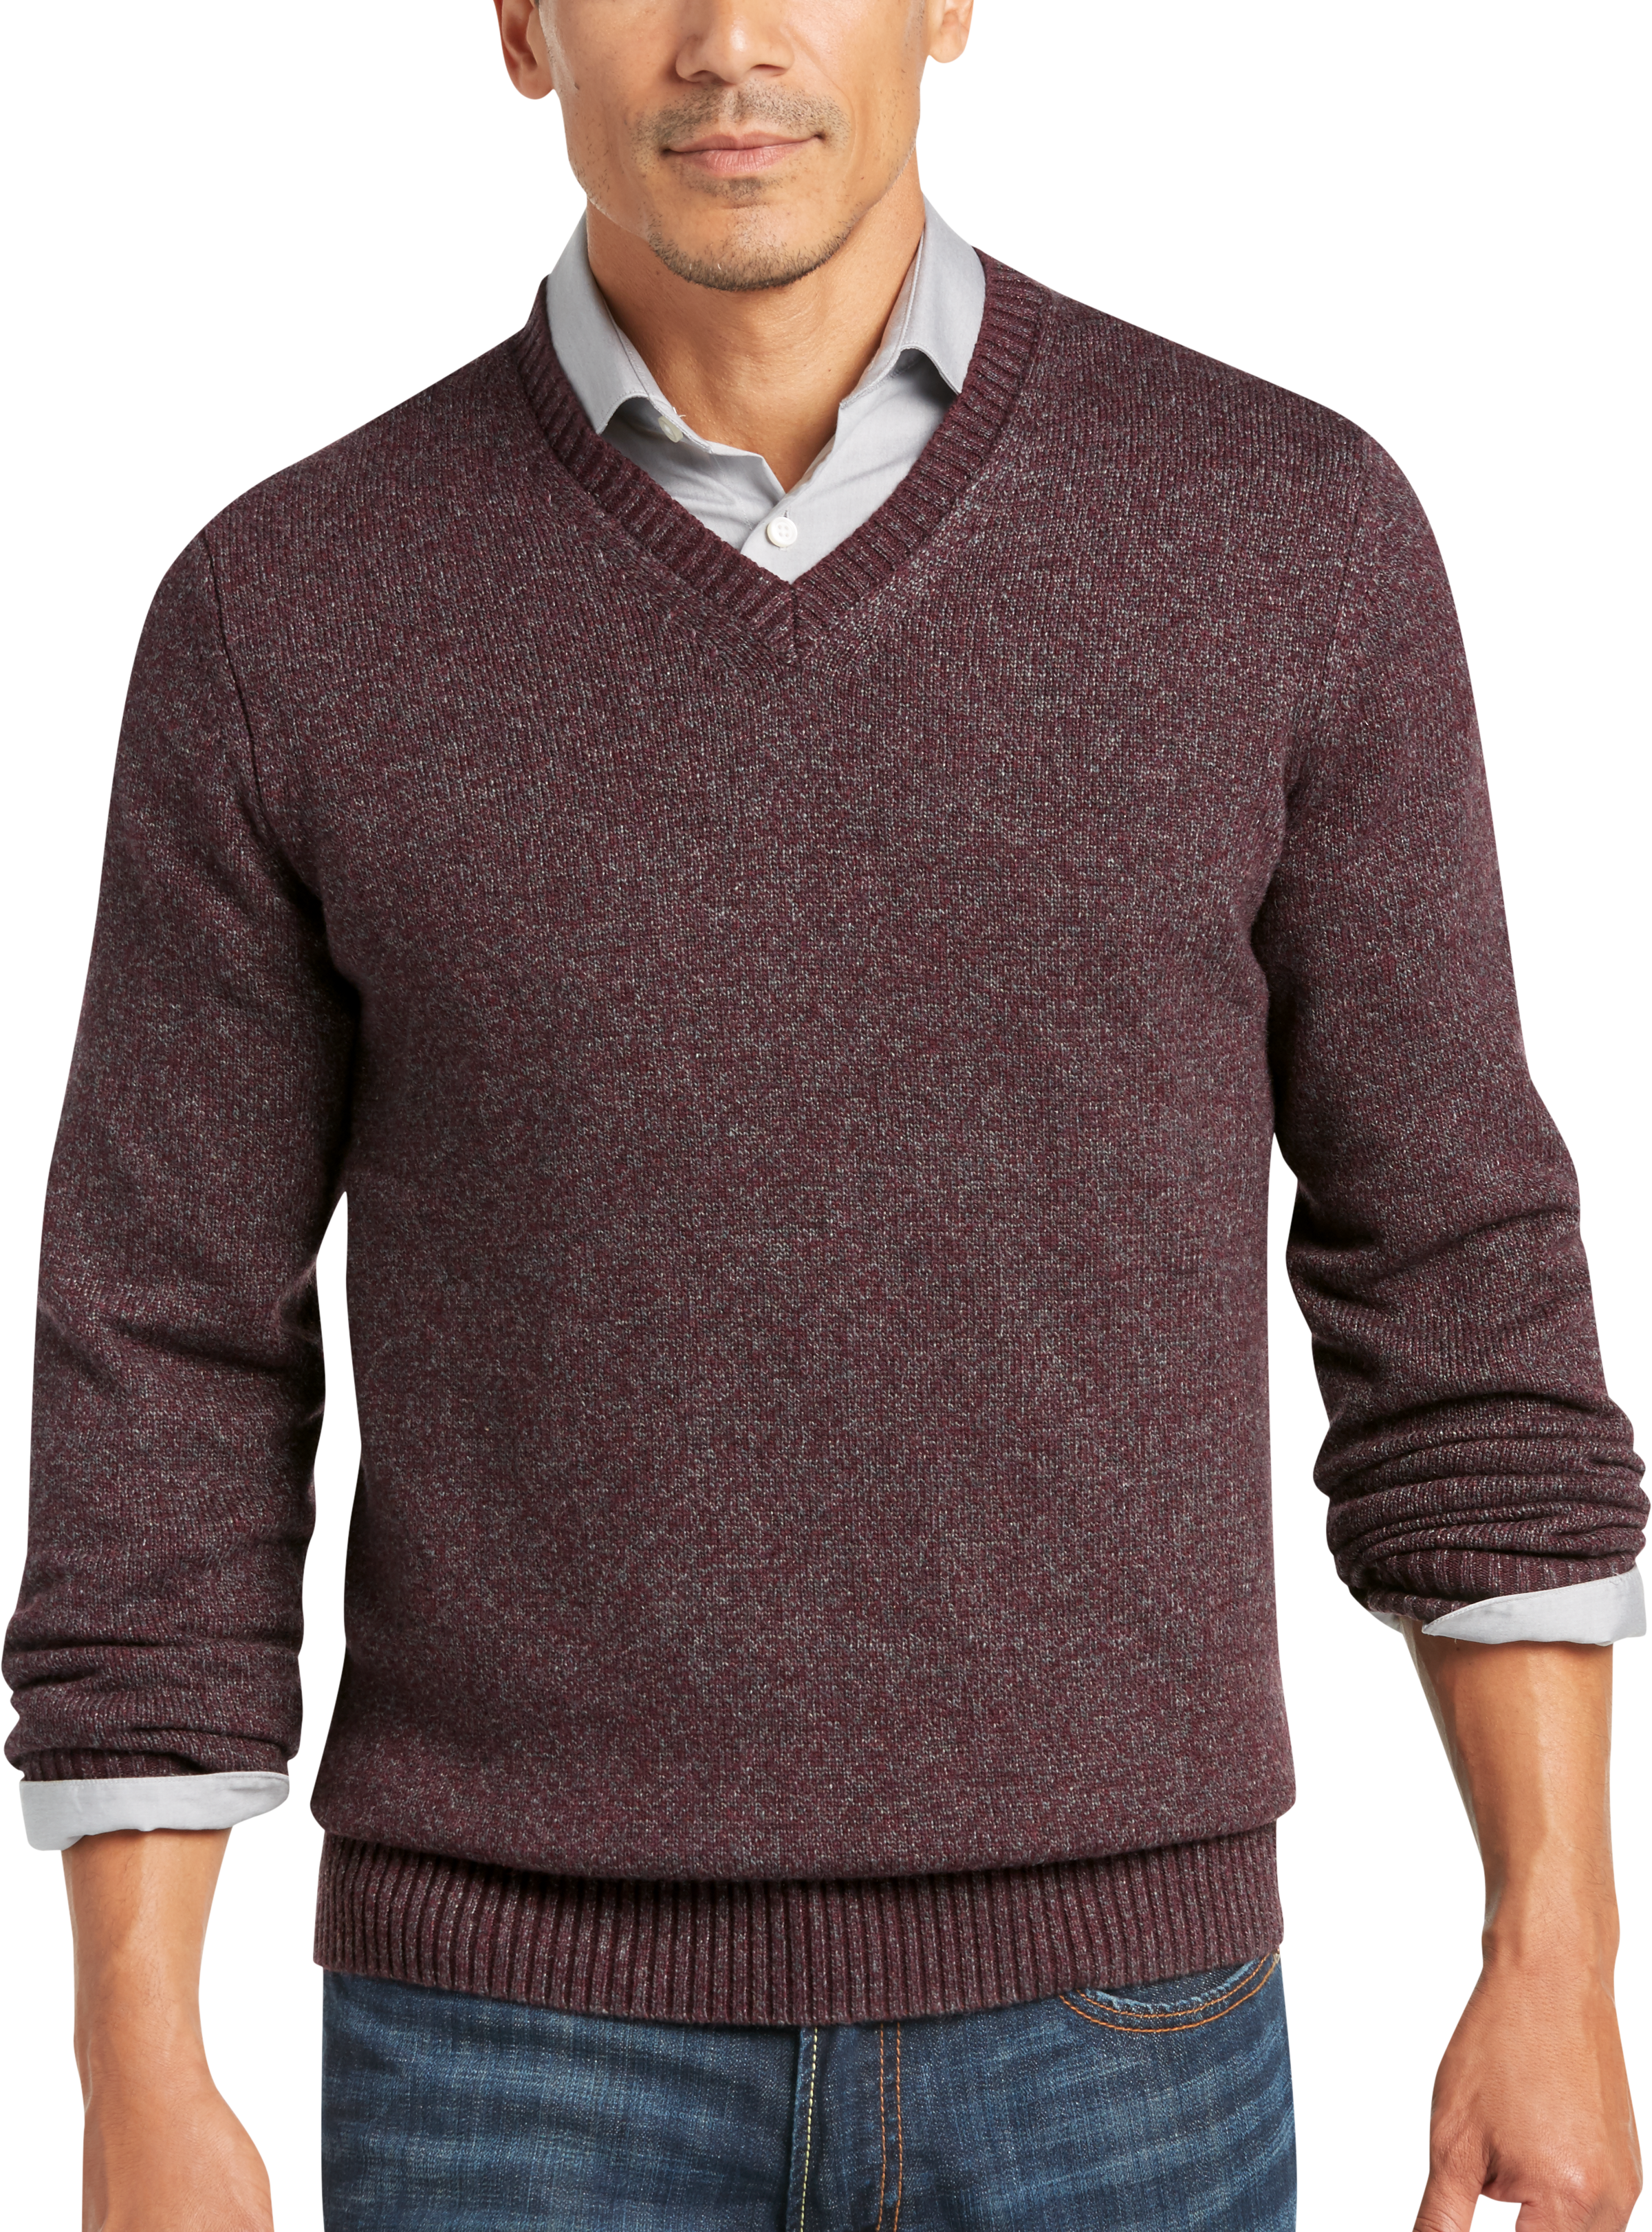 Joseph Abboud Berry V-Neck Sweater - Men's Sweaters | Men's Wearhouse